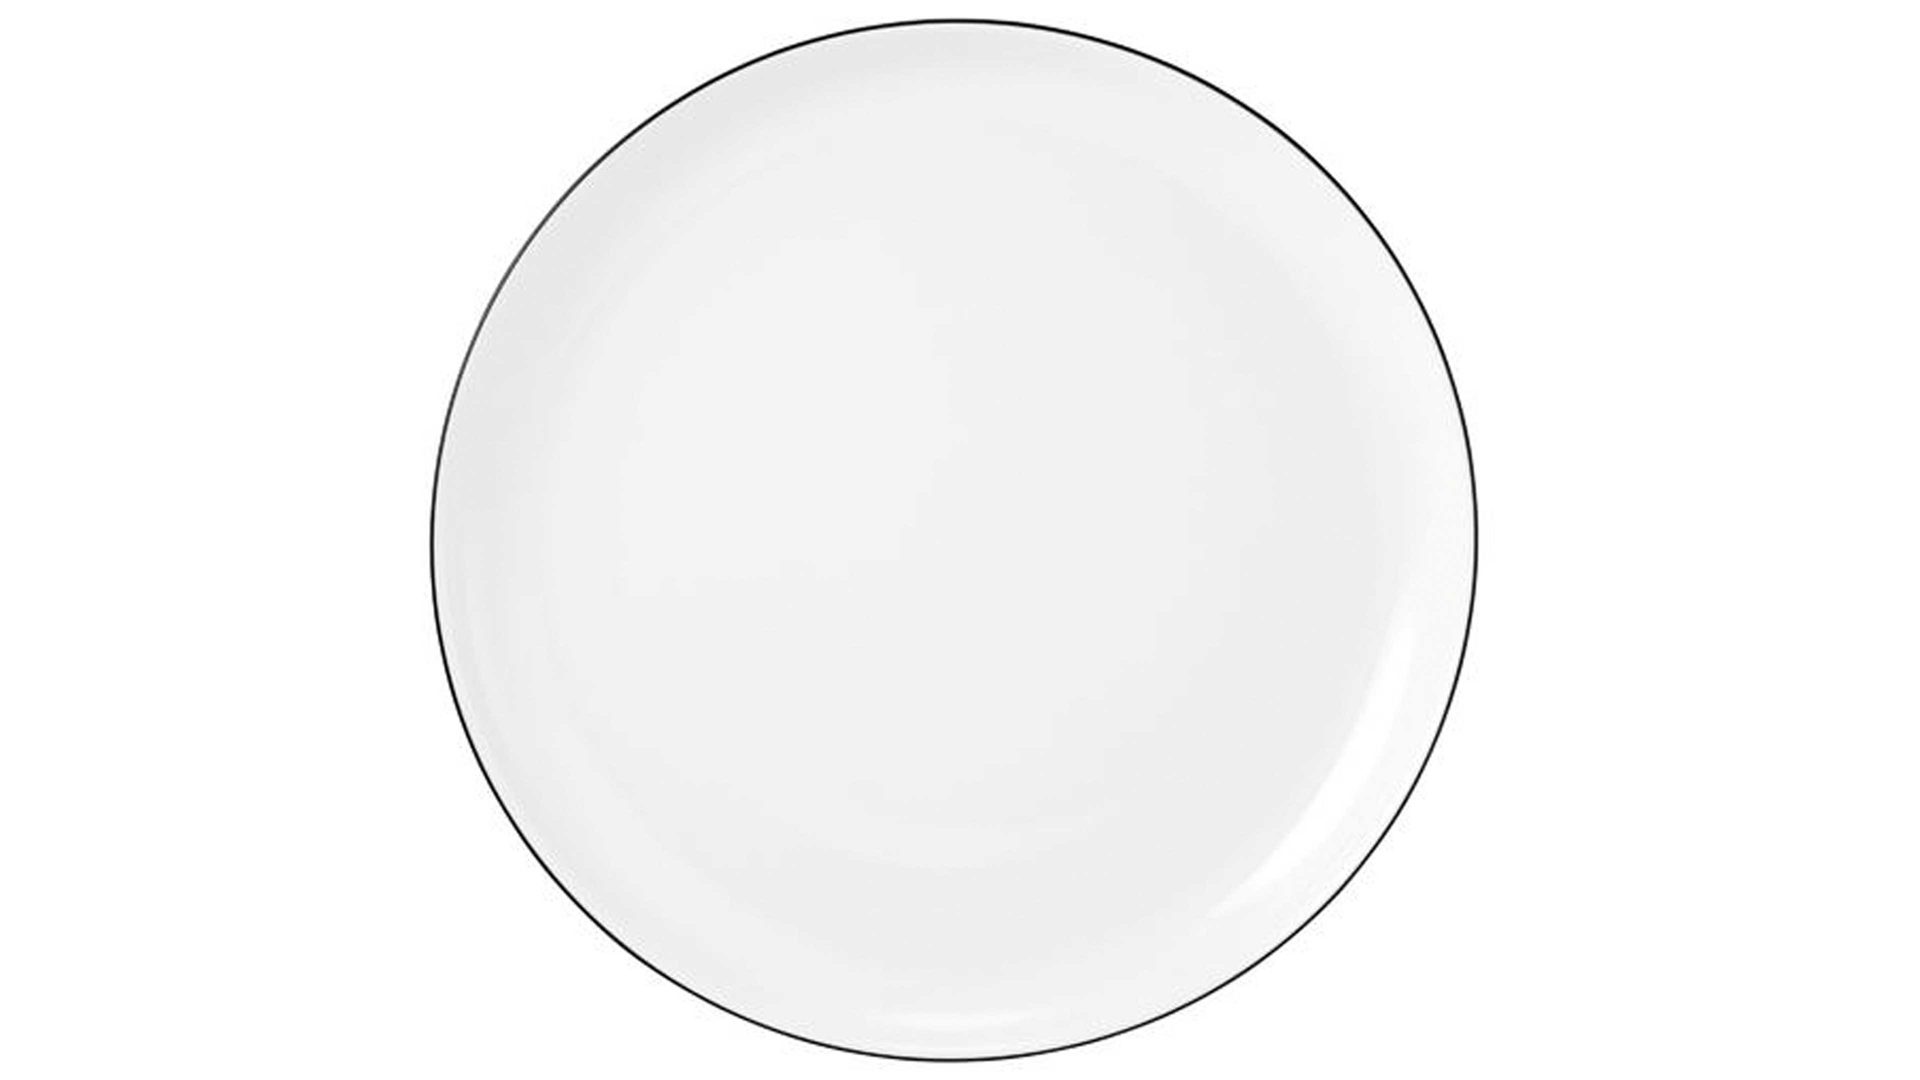 Kuchen- / Frühstücks- / Dessertteller Seltmann aus Porzellan in Weiß Seltmann Lido – Brotteller weißes Porzellan – Durchmesser ca. 17 cm